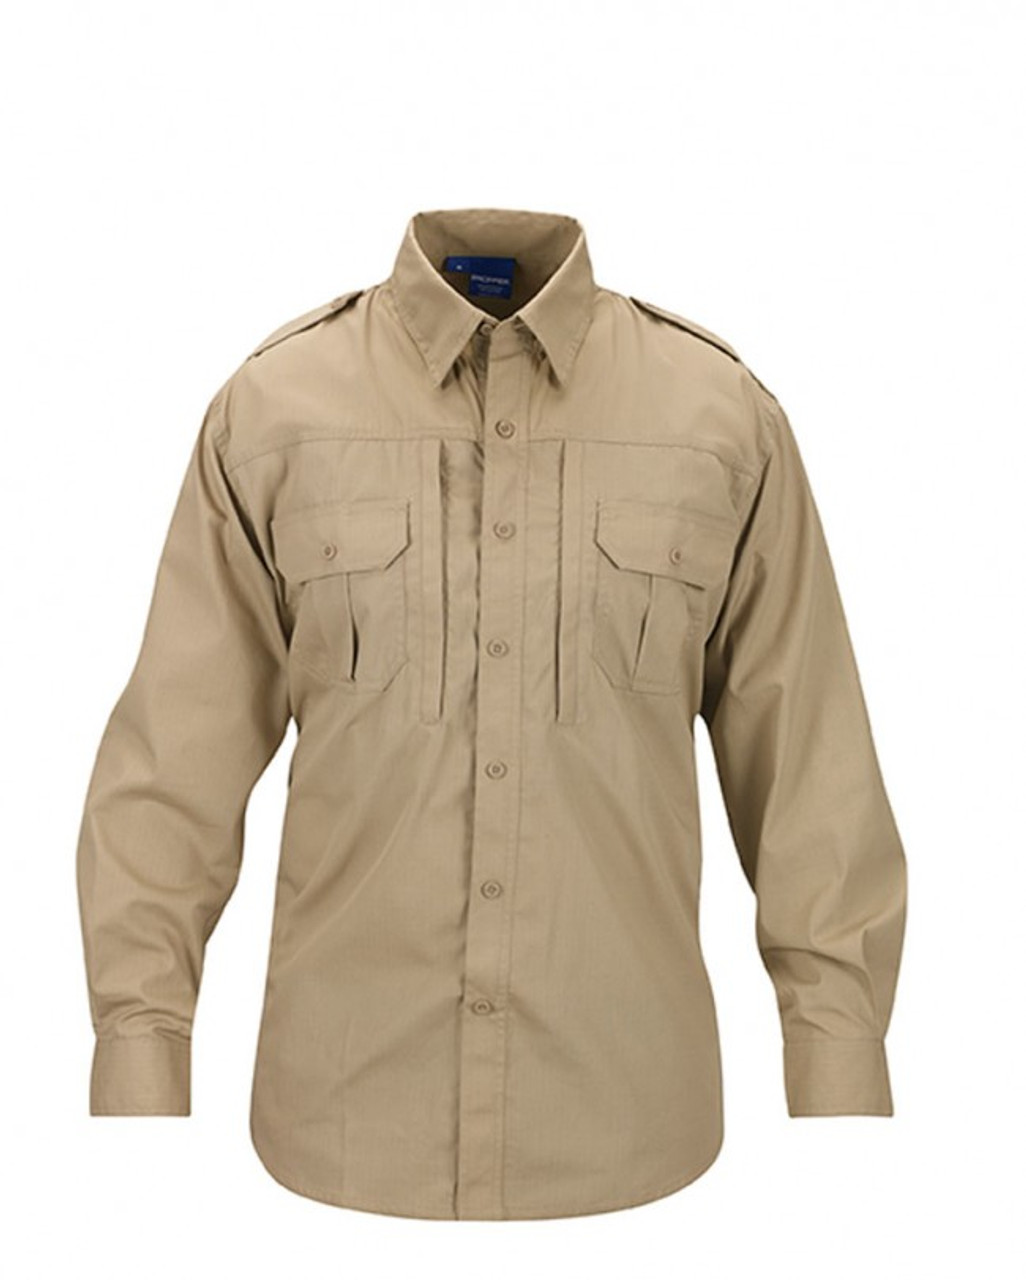 Propper 1/4 Zip Job Shirt, LAPD Navy